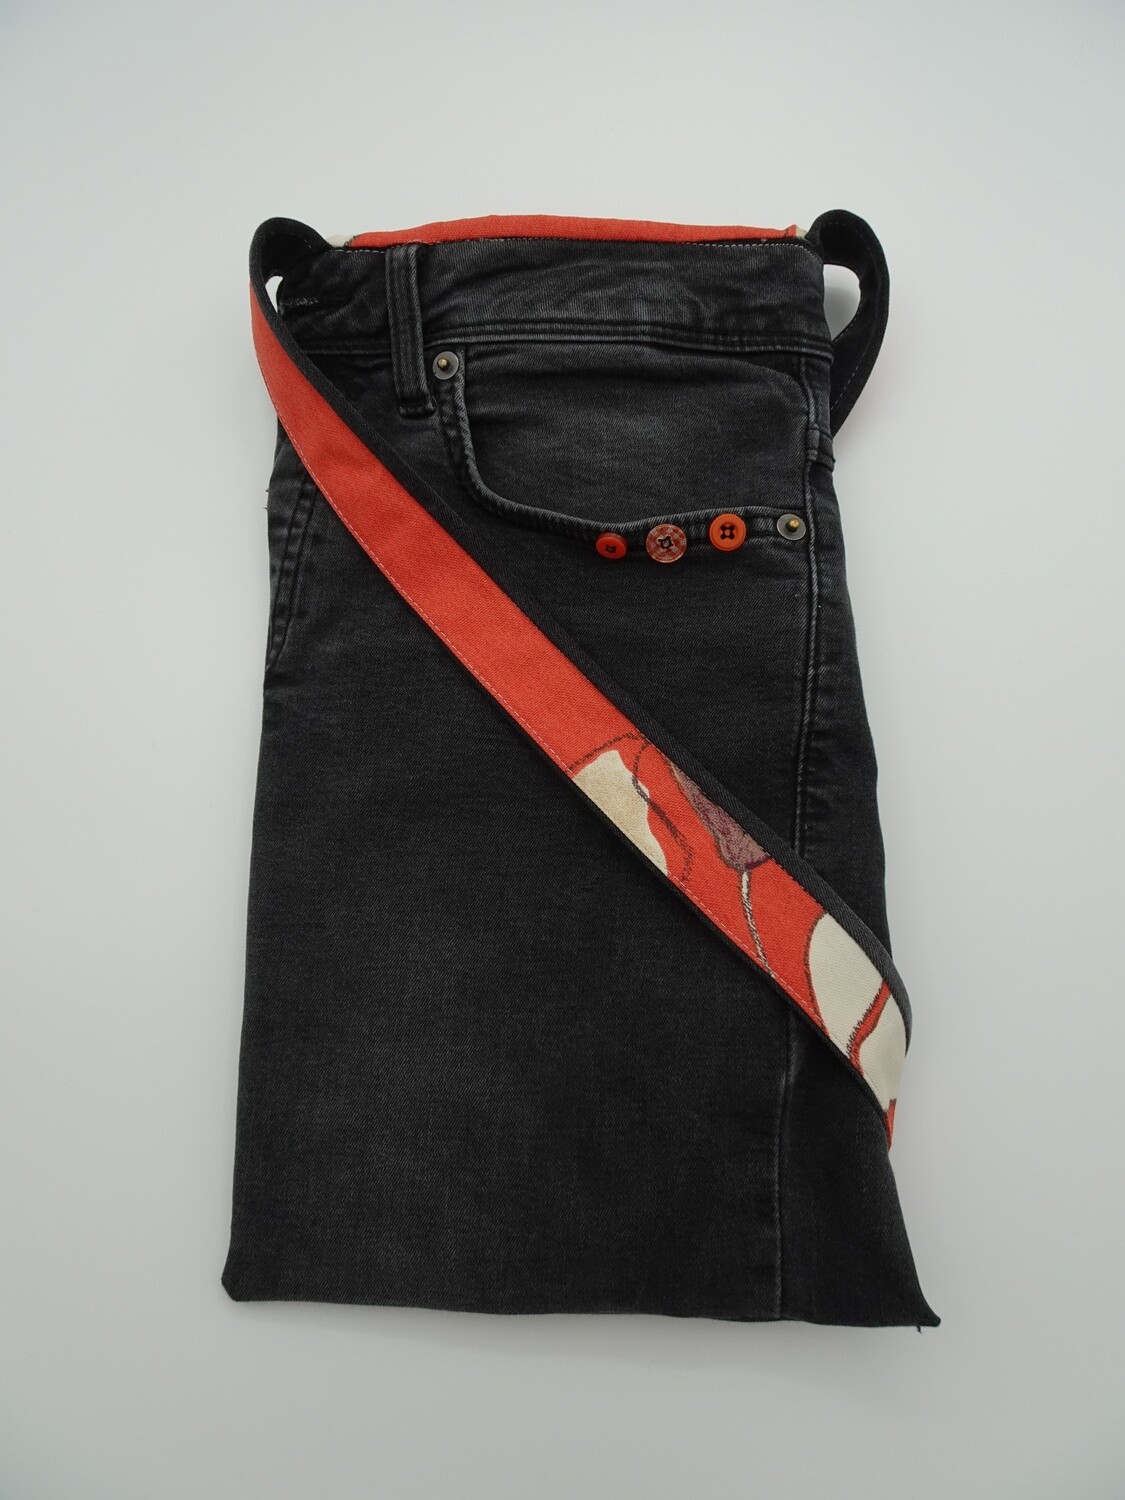 Black Festival Jeans Bag (Orange Buttons)